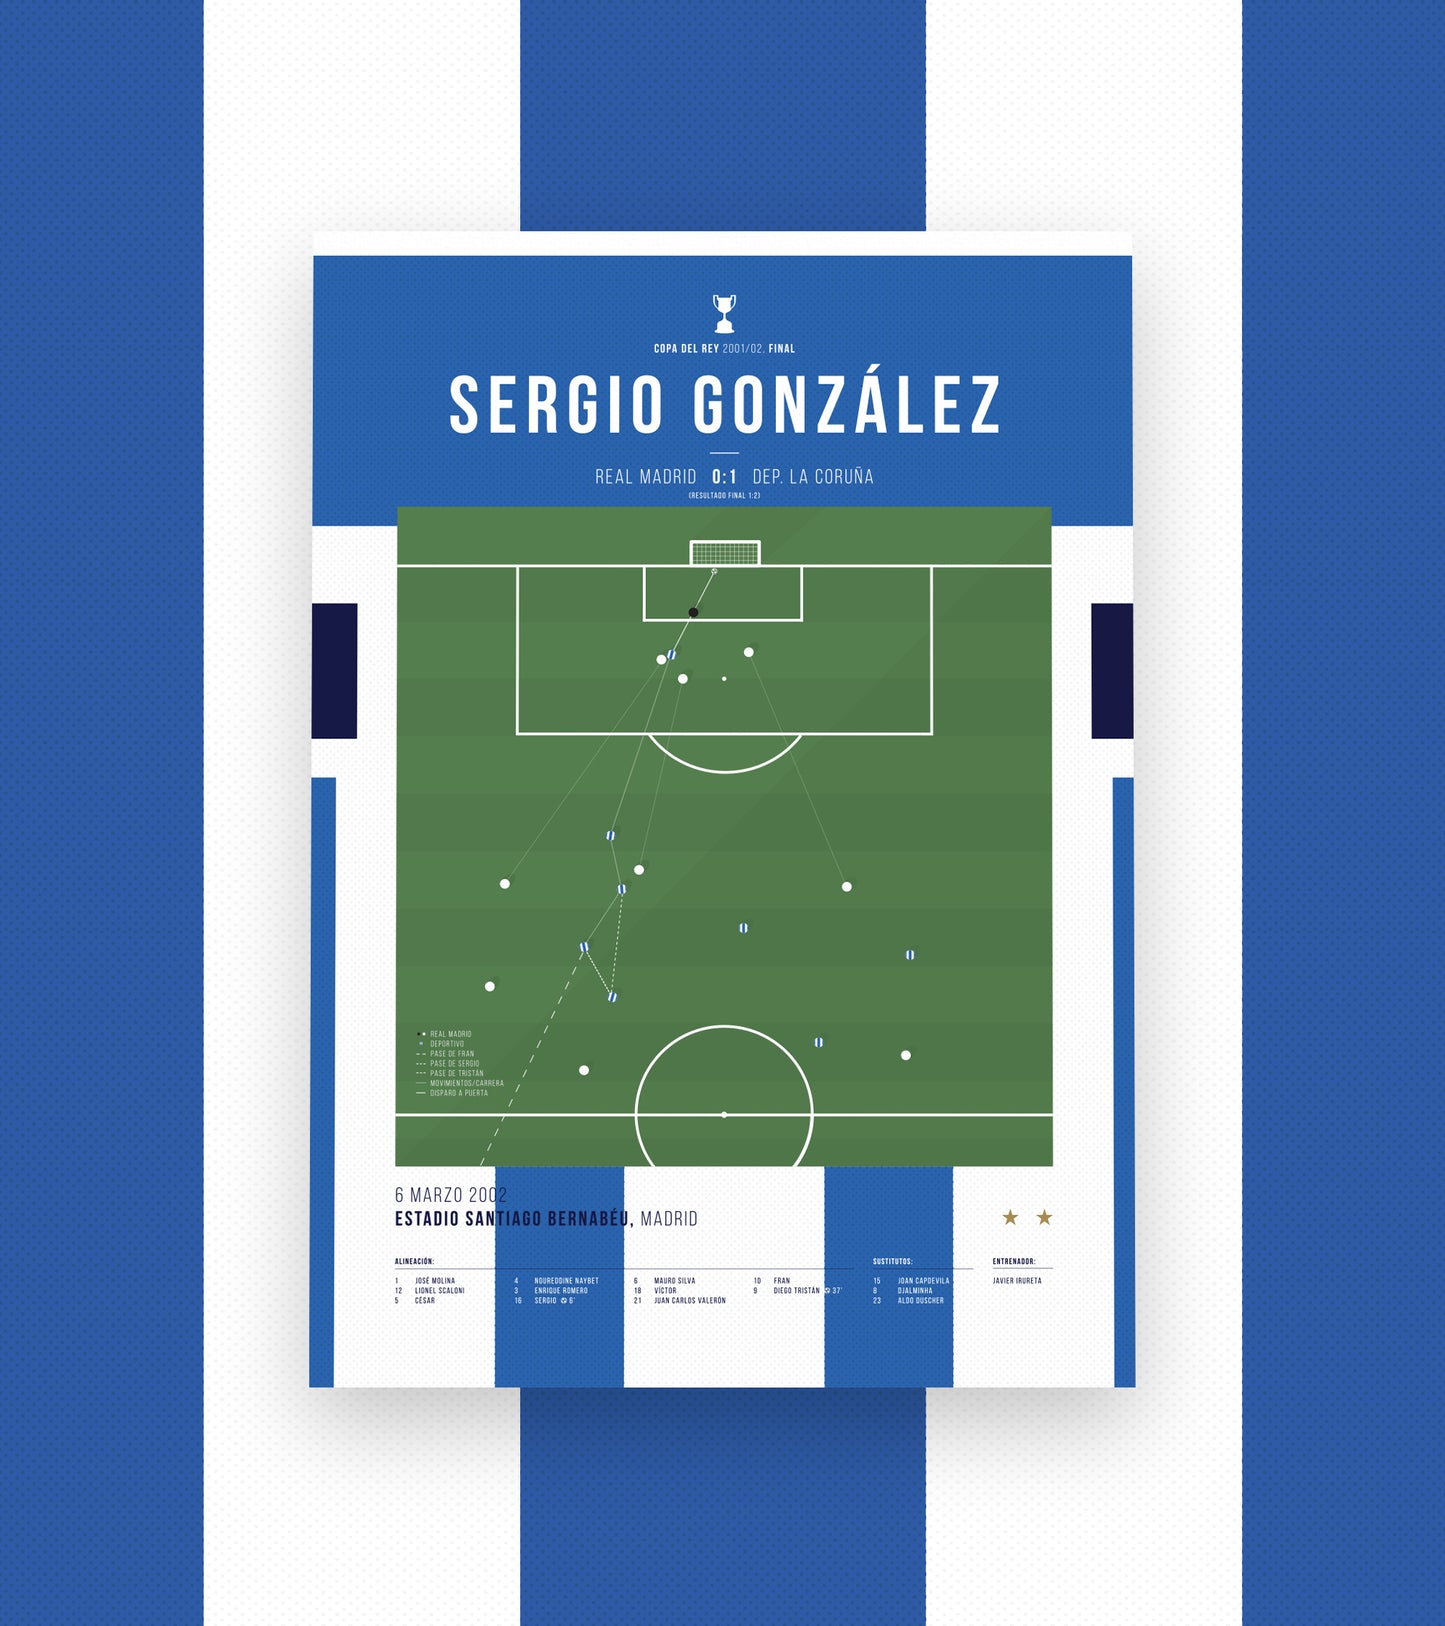 Sergio Gonzalez's goal in the historic Deportivos's 'Centenariazo' win at Bernabéu